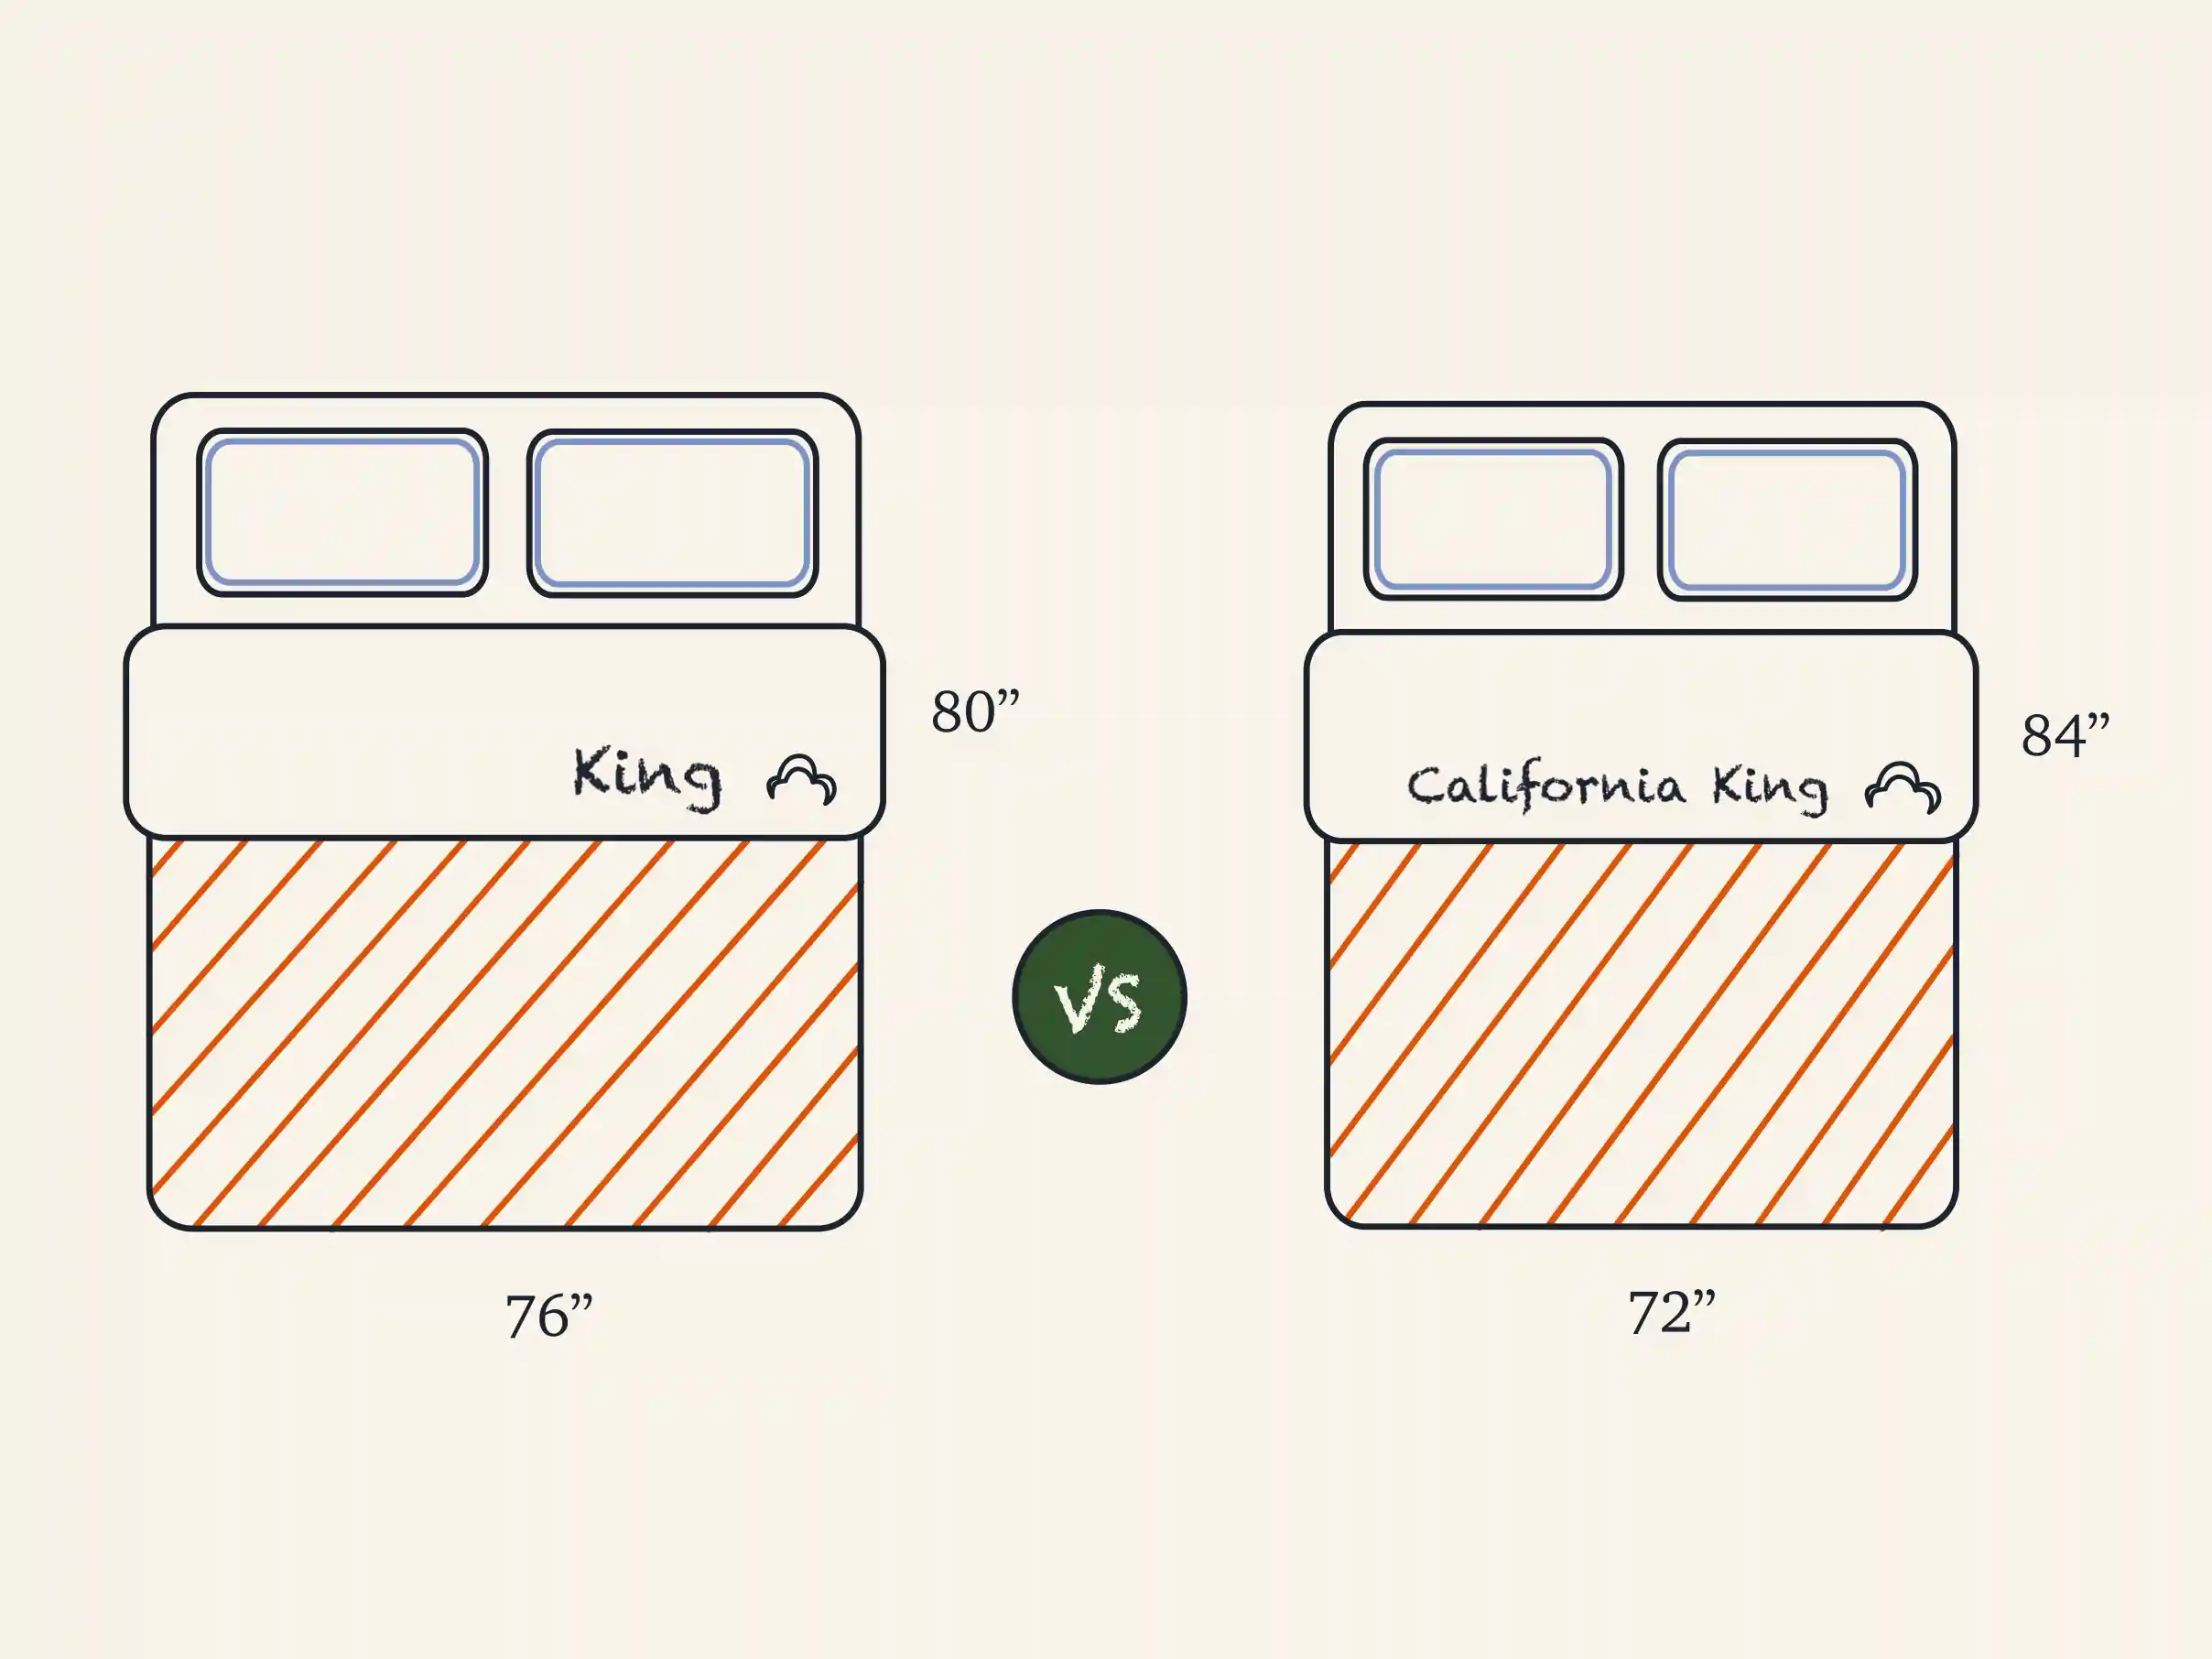 Official Split King vs Twin Size Comparison Guide